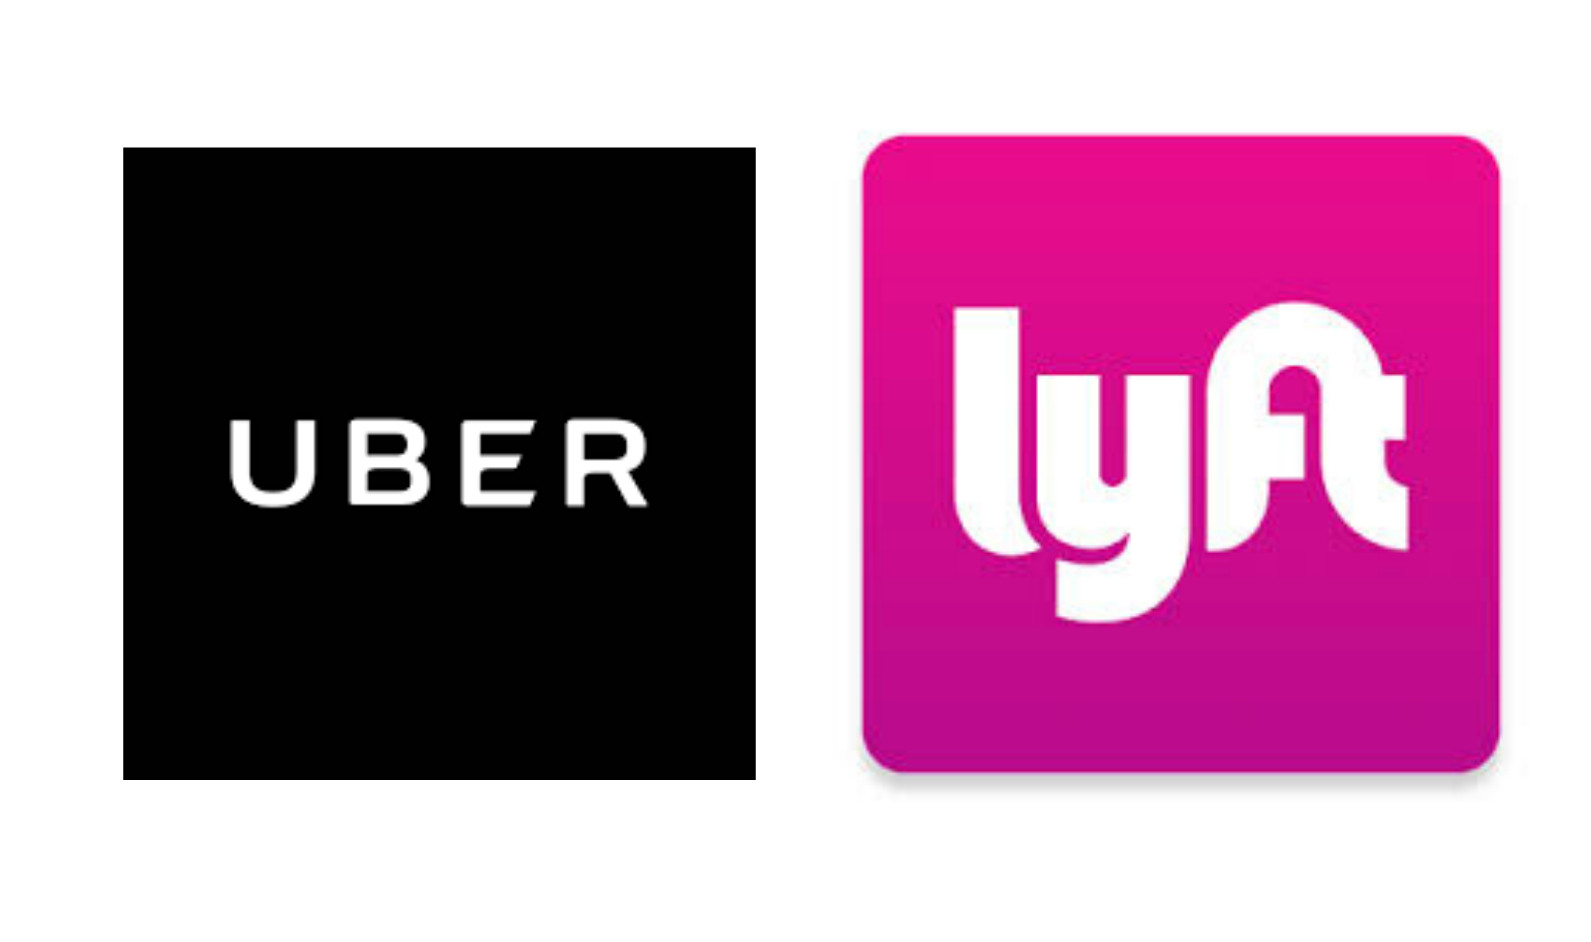 uber and lyft logos